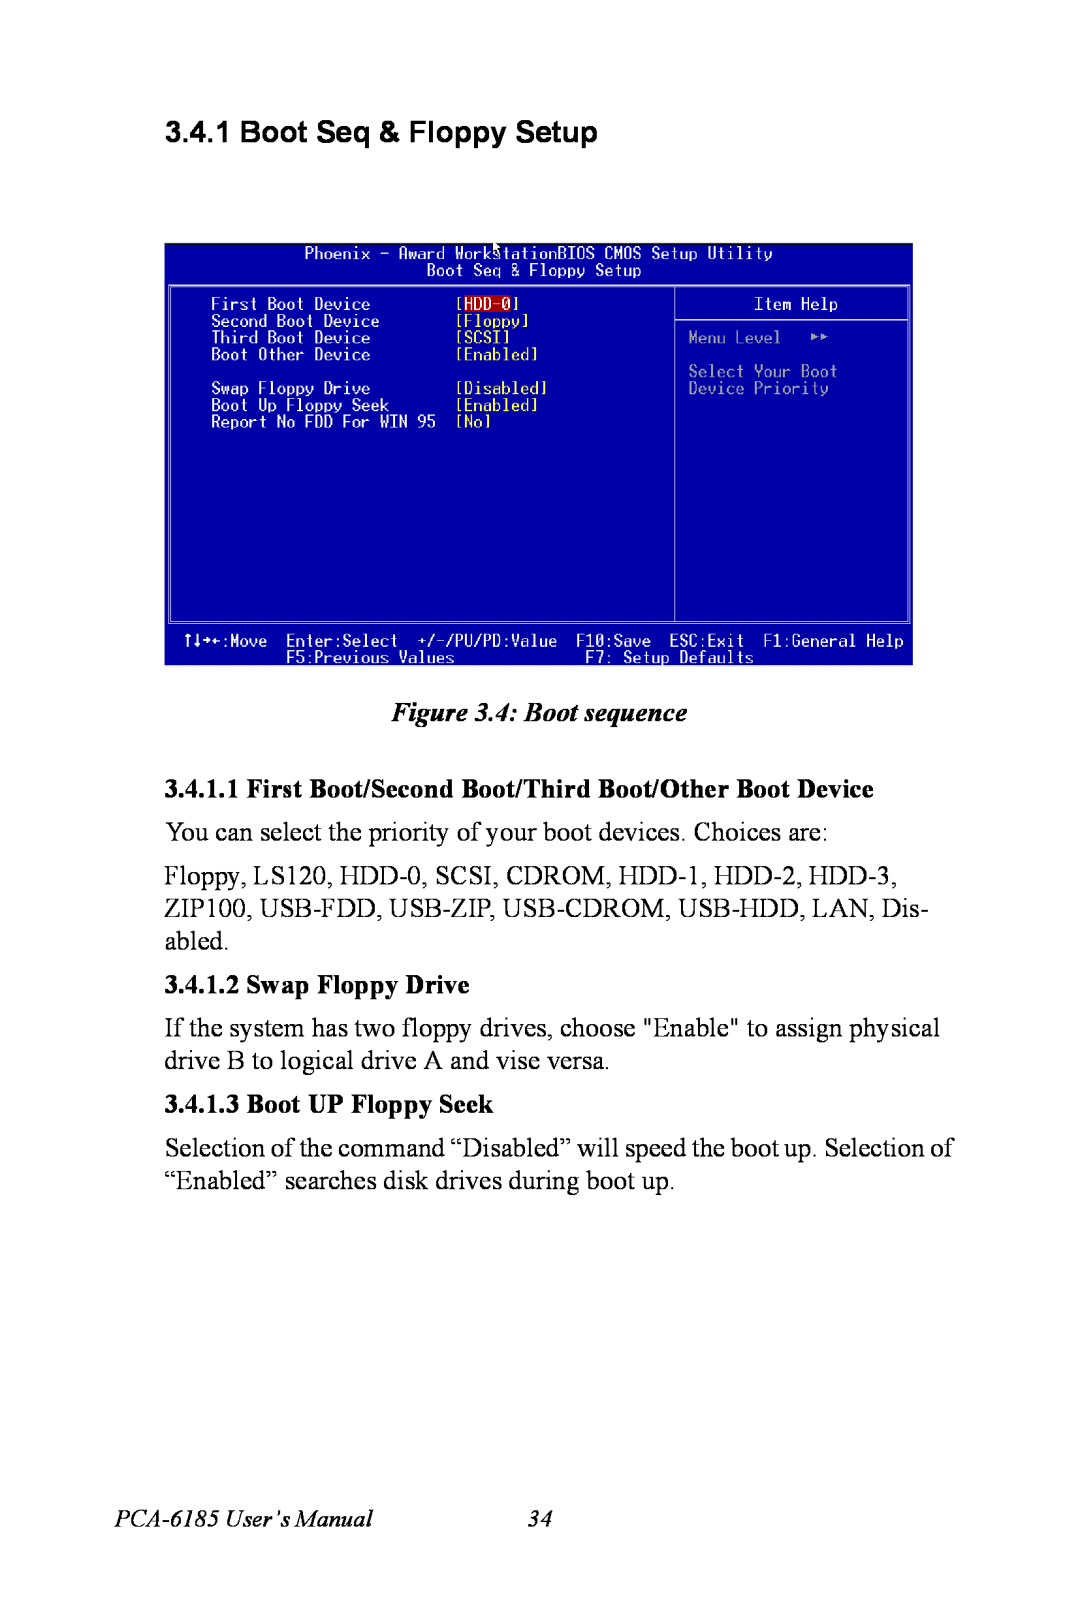 Advantech PCA-6185 user manual Boot Seq & Floppy Setup, 4 Boot sequence, Swap Floppy Drive, Boot UP Floppy Seek 